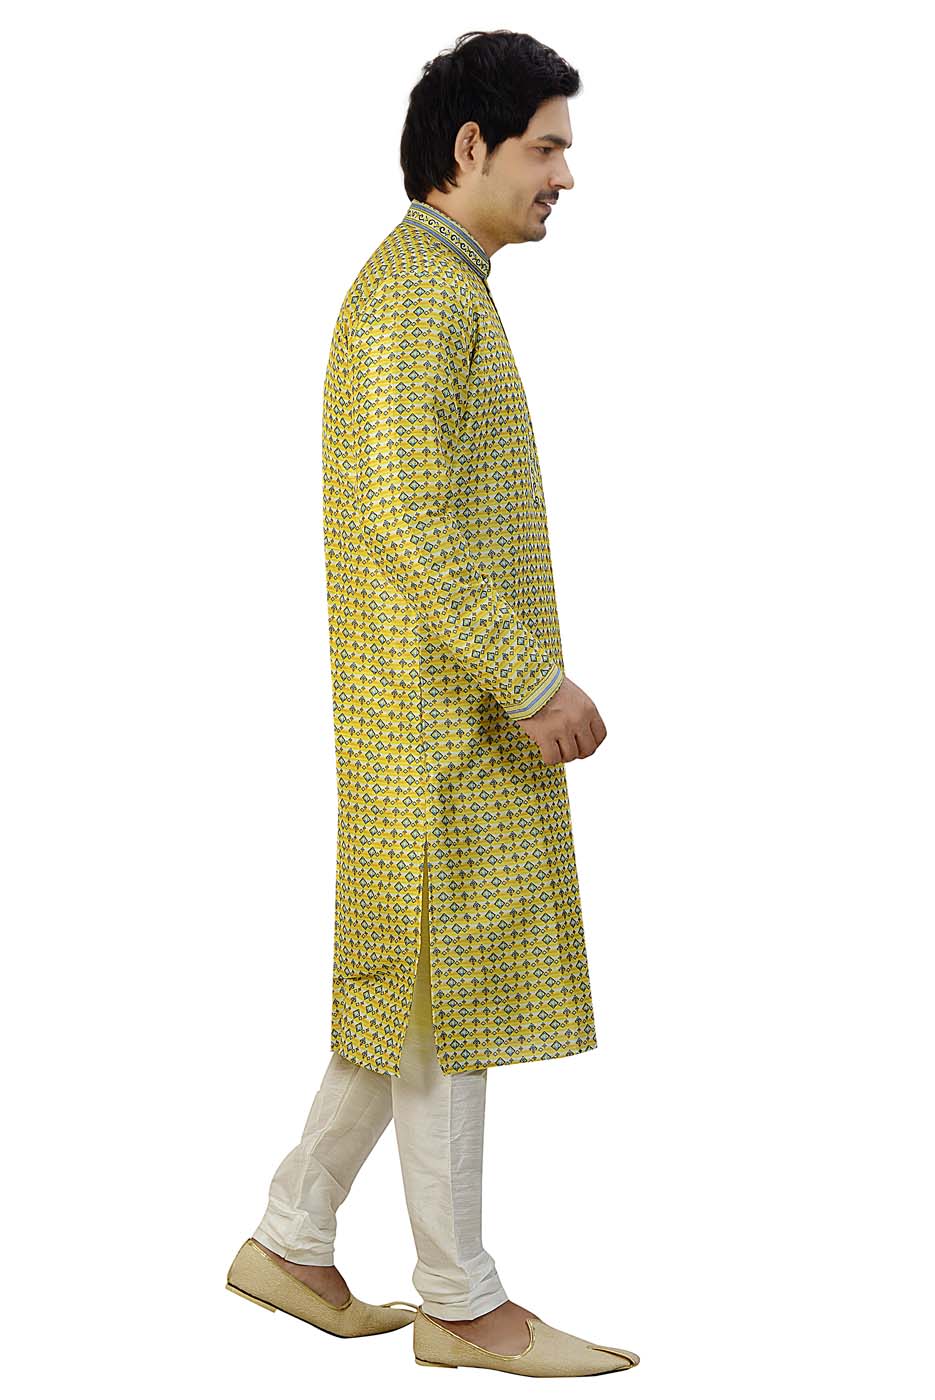 Digital Print Silk Kurta Suit With Resham Thread Work On Neck Line - Mustard